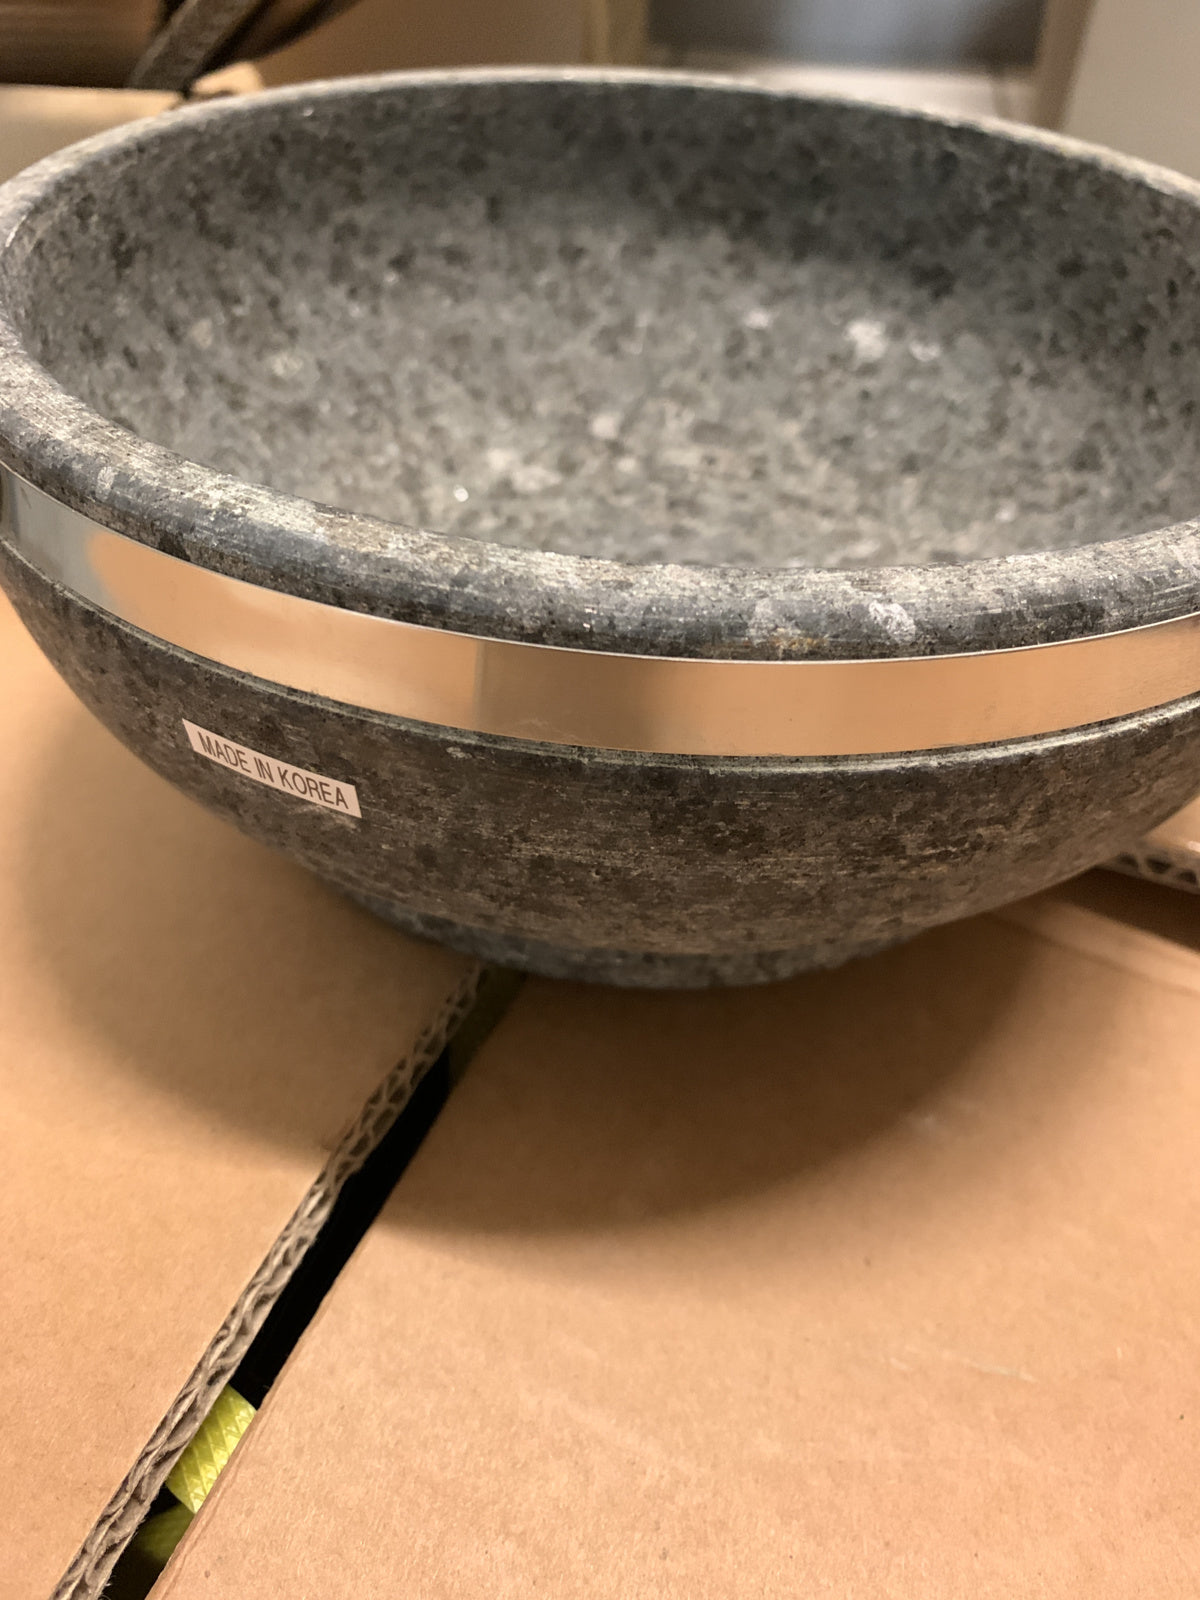 Korean Stone Bowl (Dolsot) Sizzling Hot Pot For Bibimbap 20c